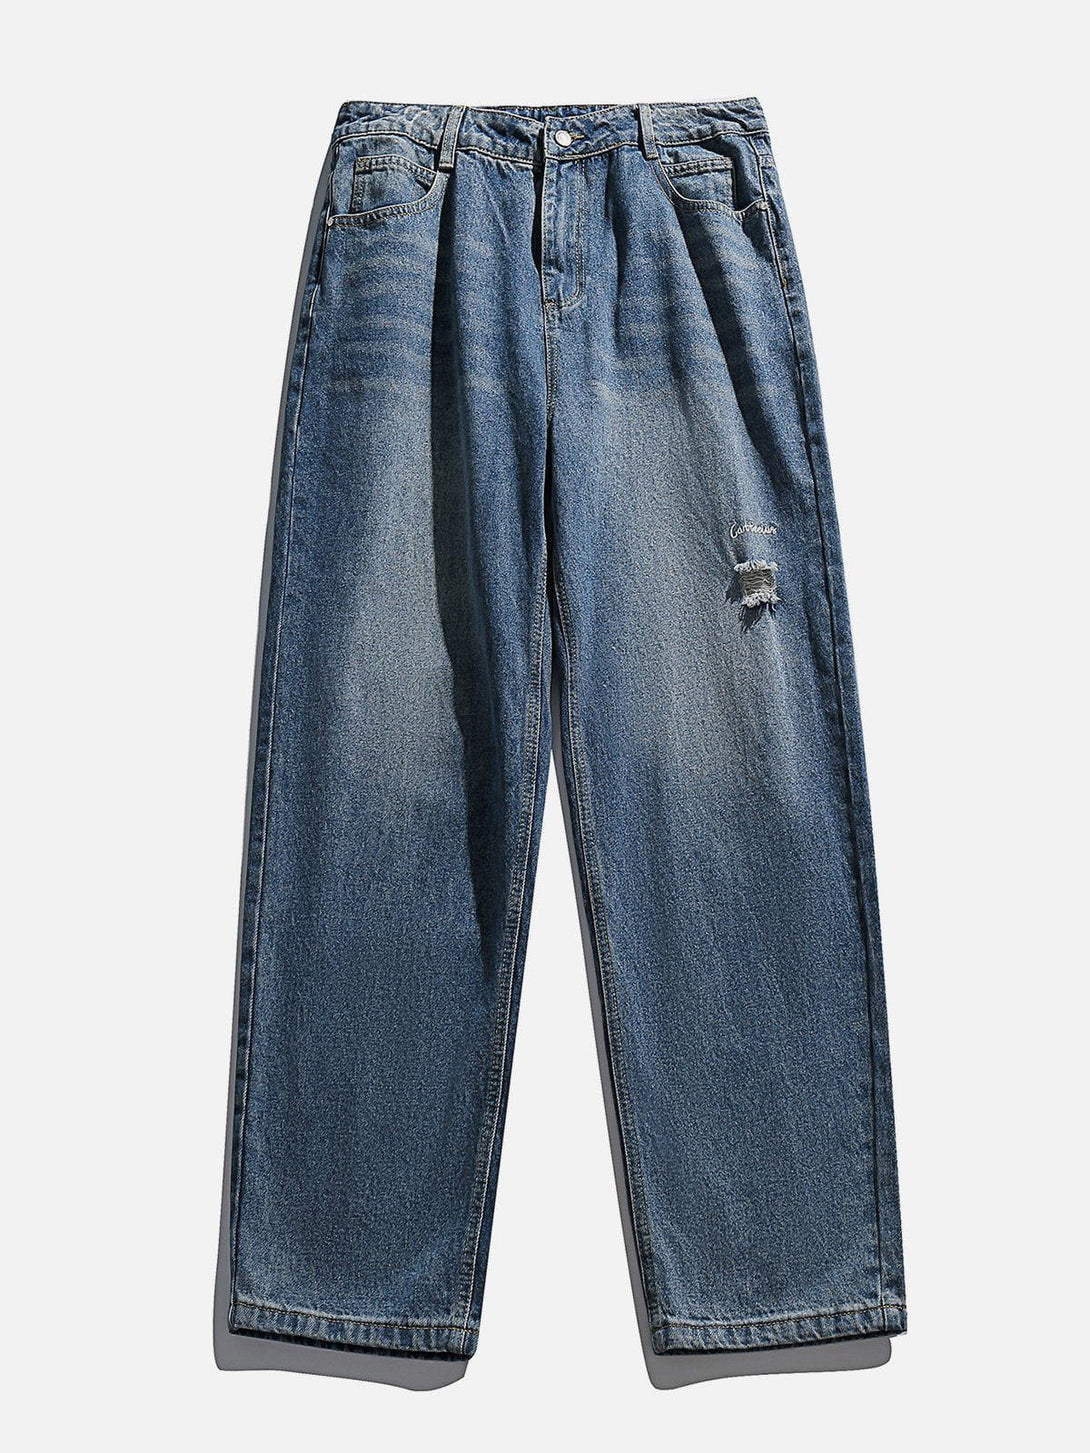 Aelfric Eden Vintage Distressed Jeans – Aelfric eden